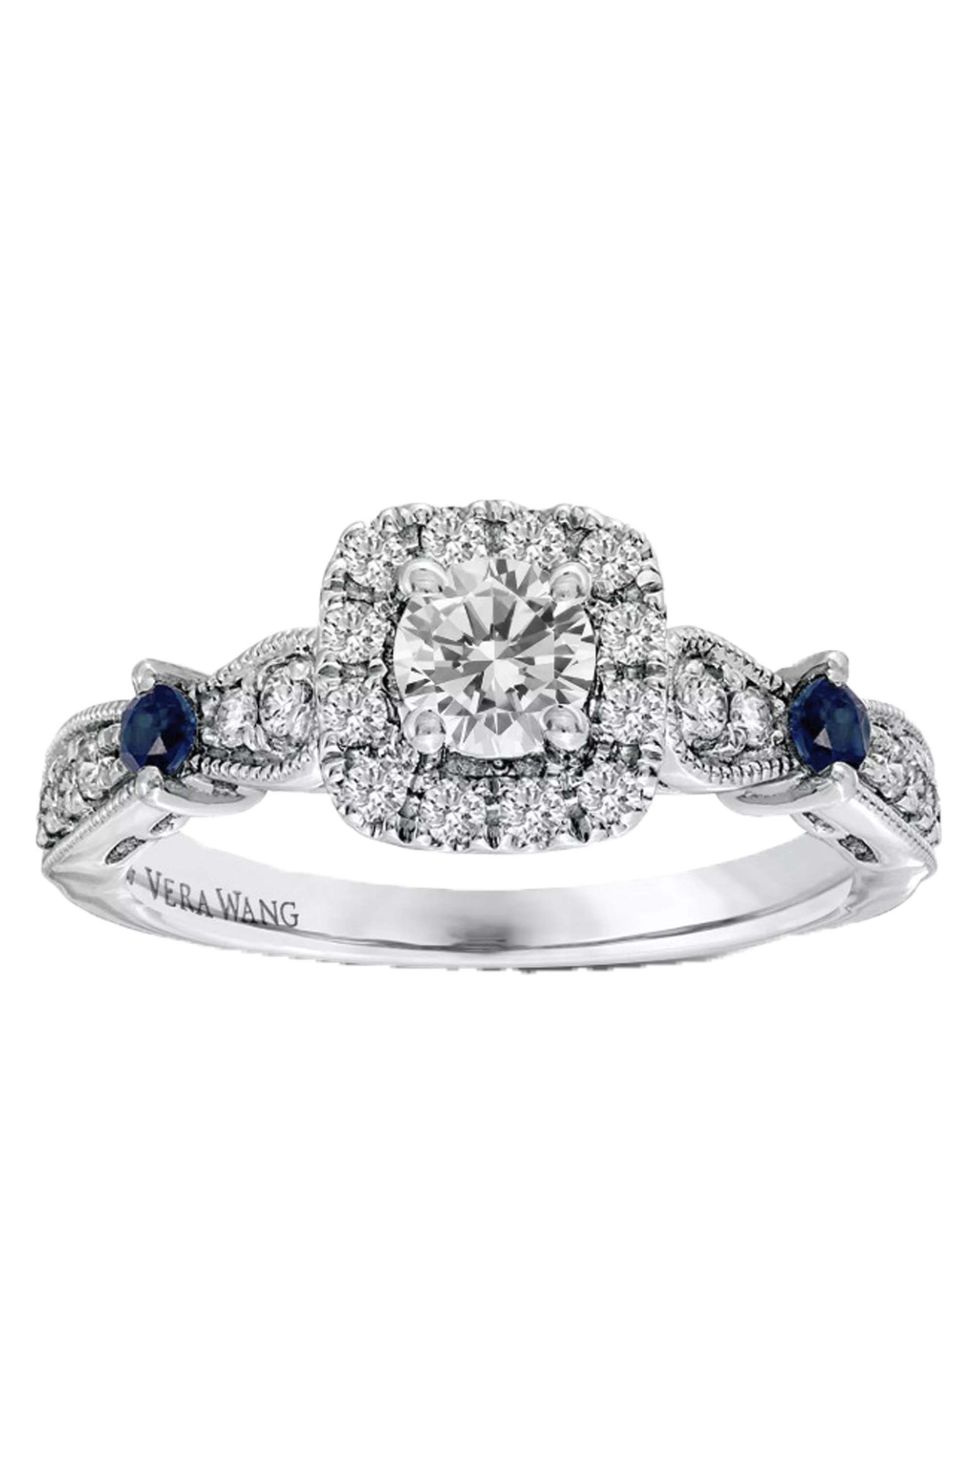 Ring, Engagement ring, Pre-engagement ring, Fashion accessory, Jewellery, Diamond, Gemstone, Platinum, Wedding ring, Silver, 